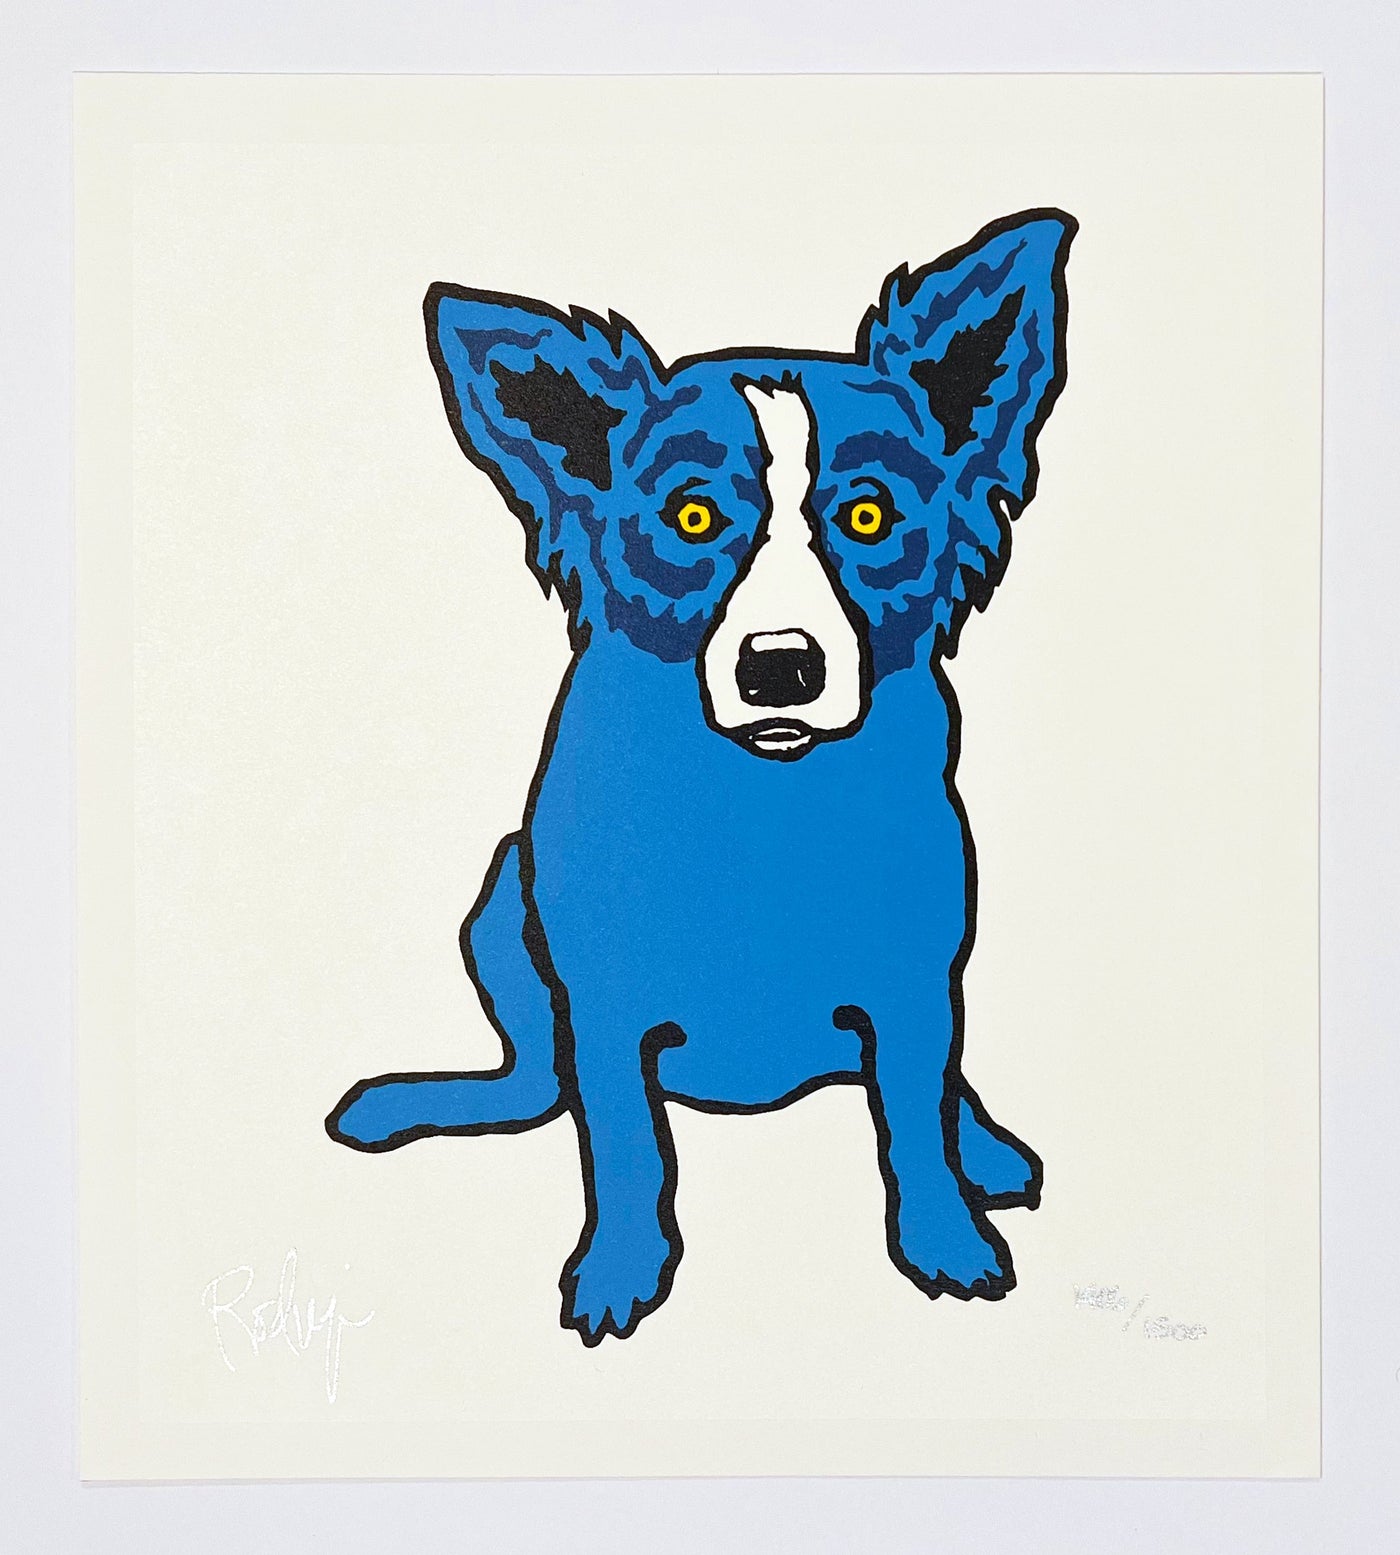 George Rodrigue Blue Dog 1994